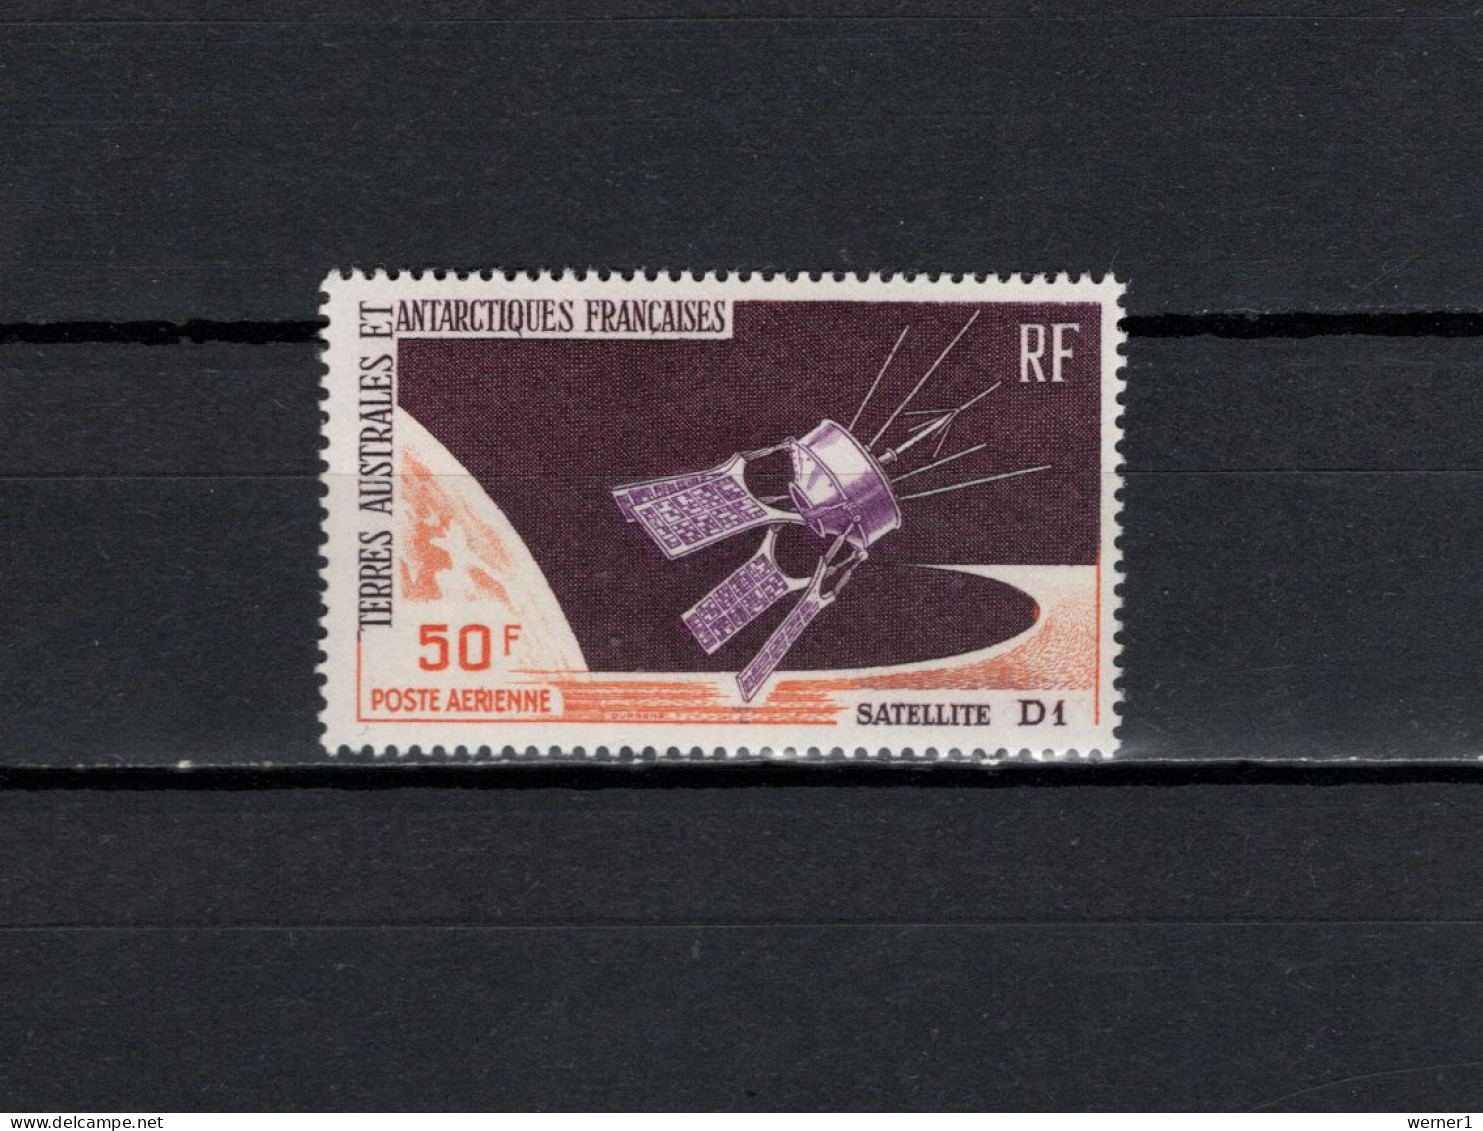 FSAT French Antarctic Territory 1966 Space, D1 Satellite Stamp MNH - Oceanía